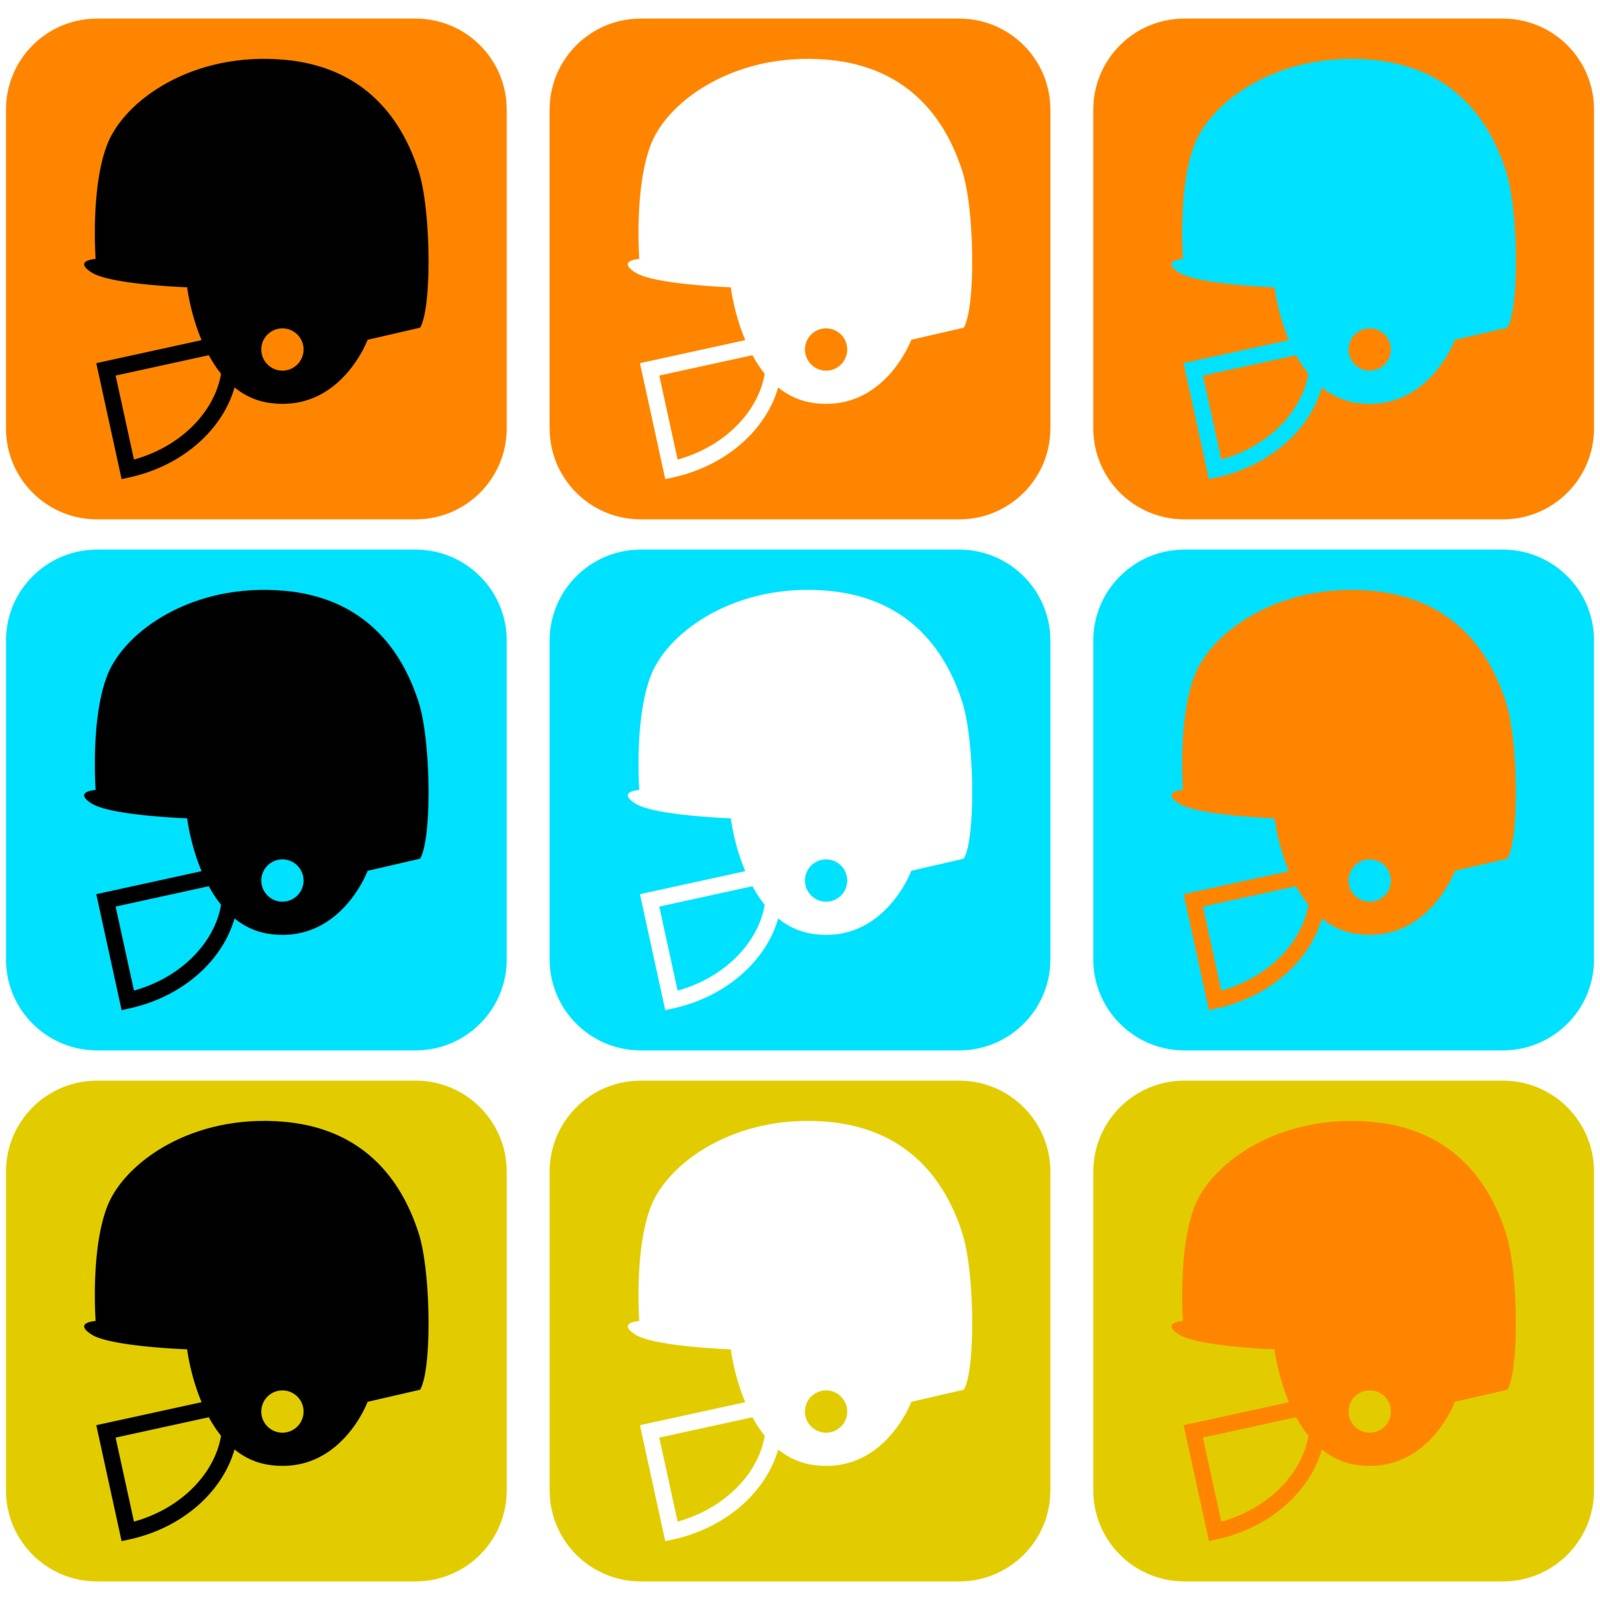 Football helmets by bruno1998